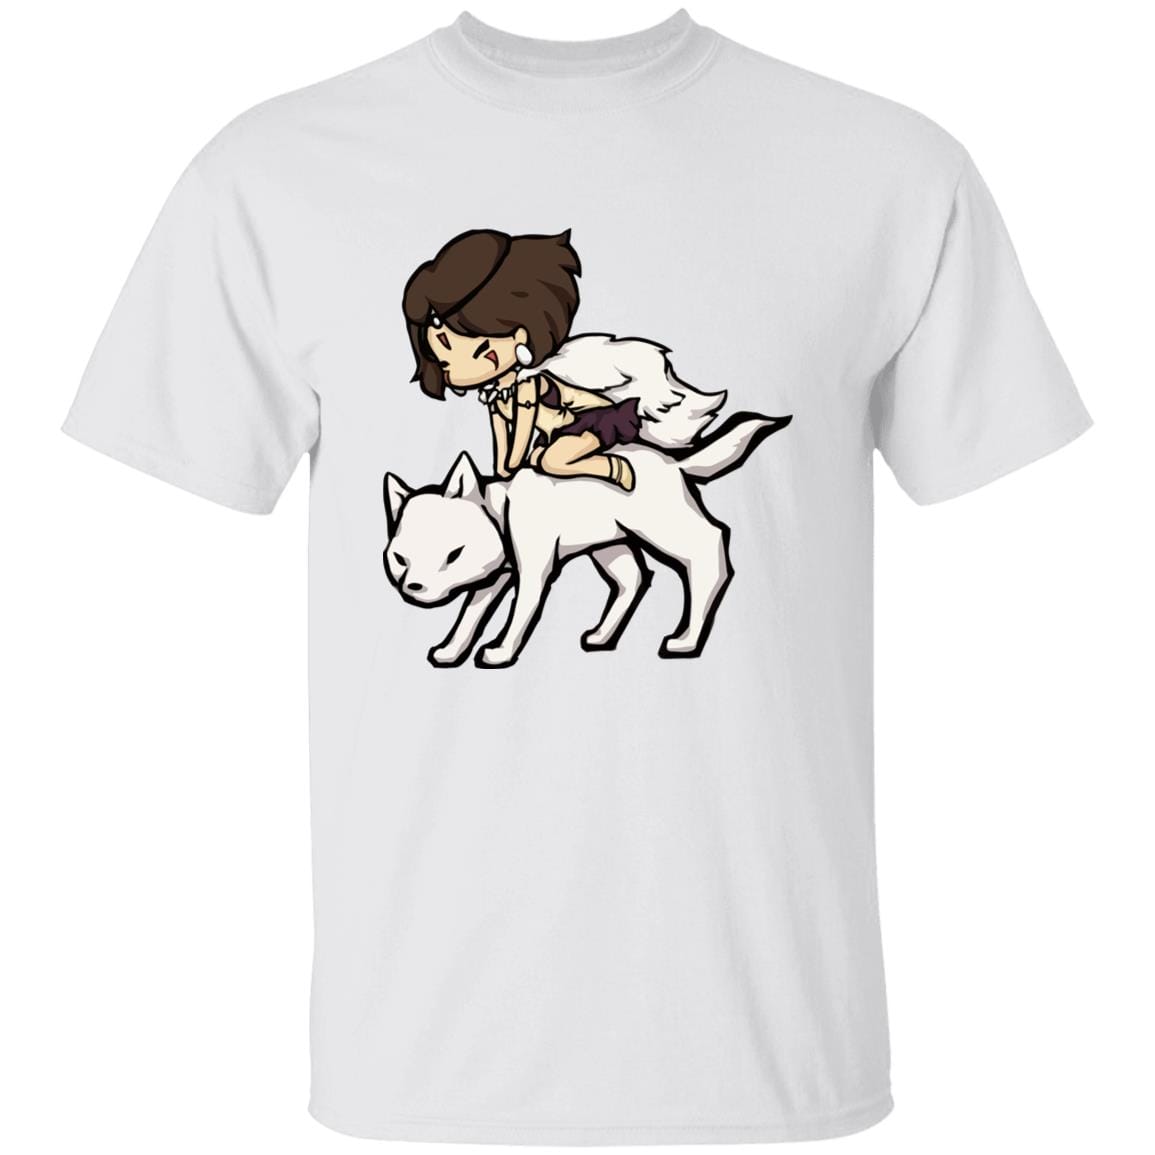 Princess Mononoke and the Wolf Chibi T Shirt